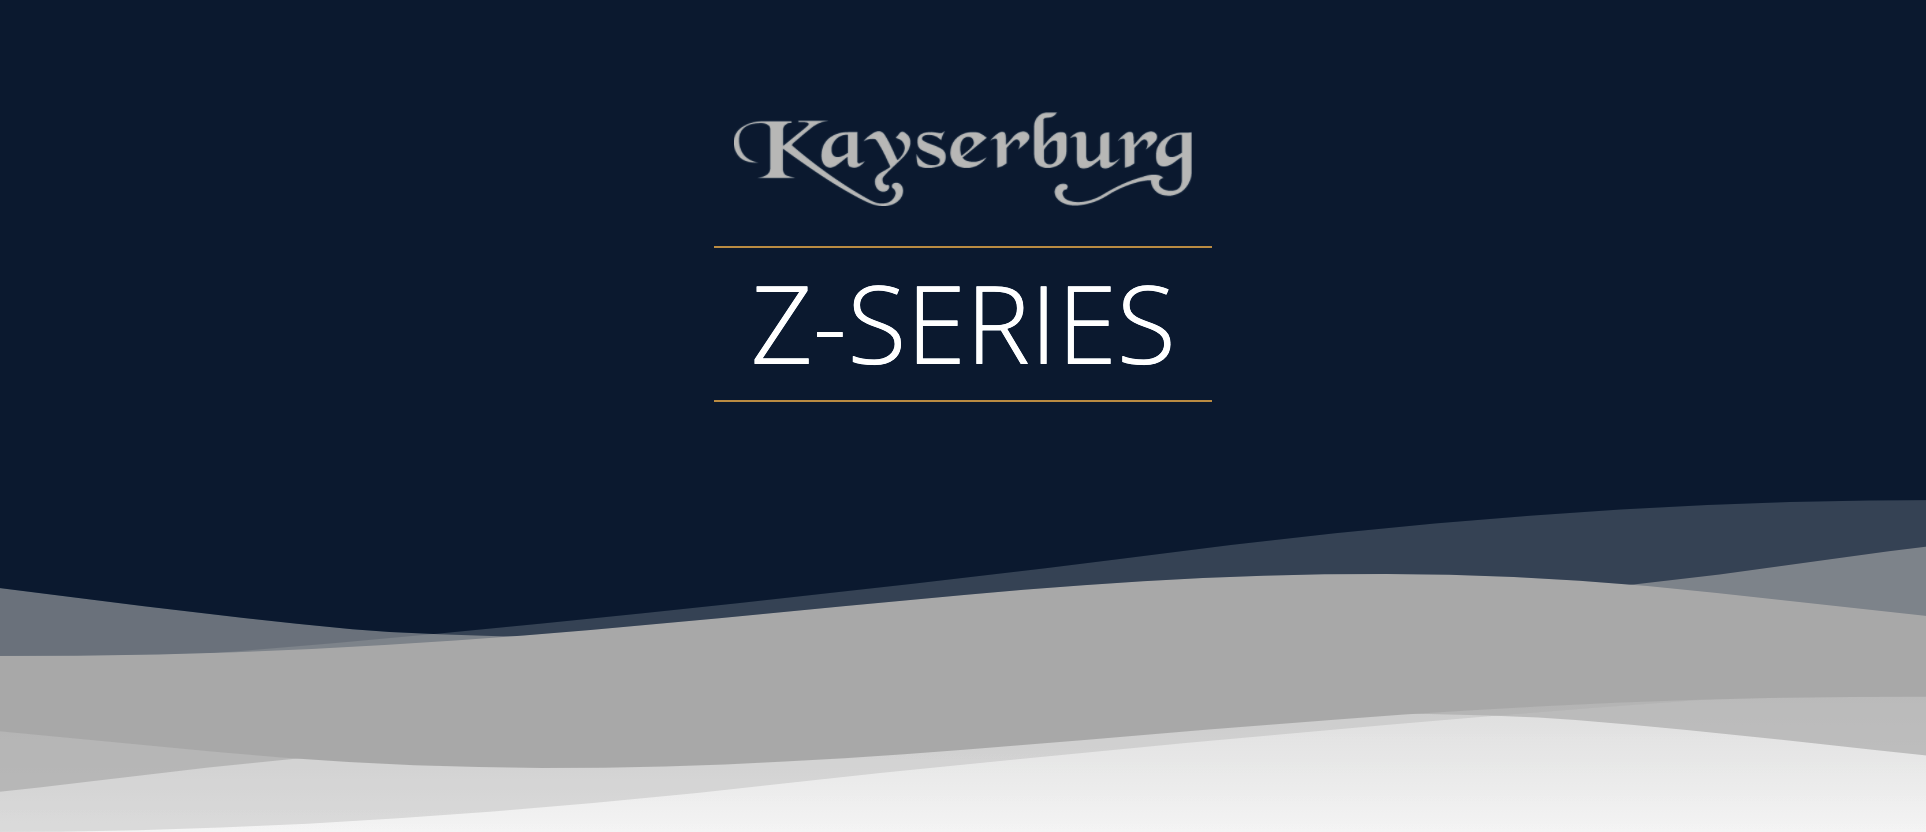 Kayserburg Artist Series 